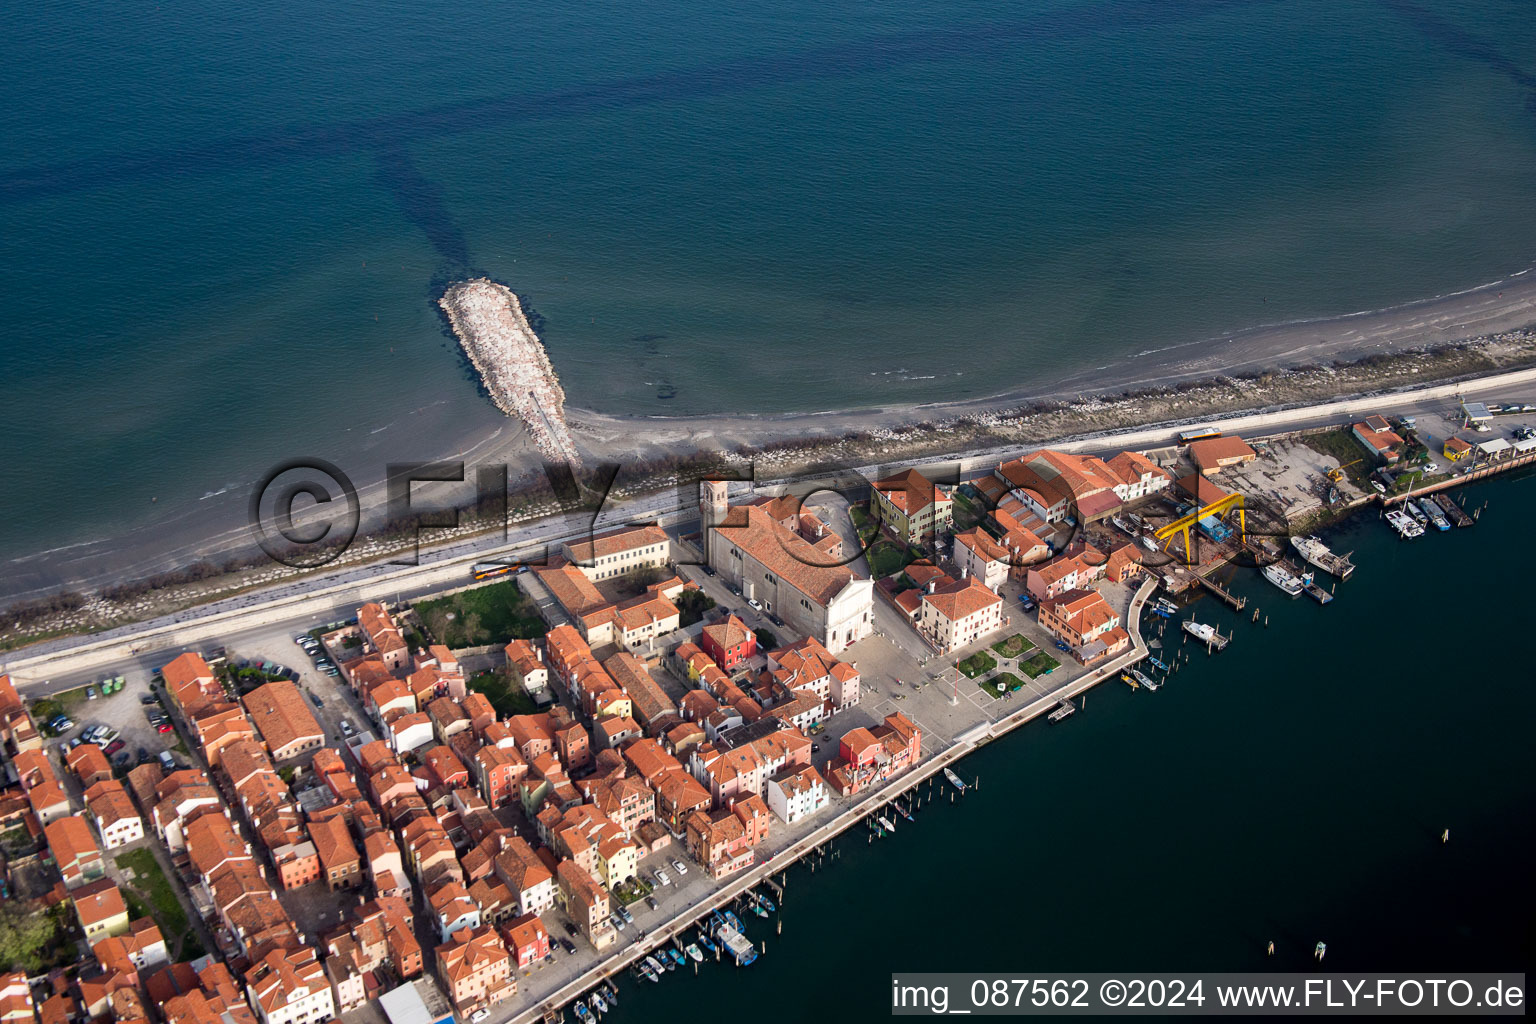 Drone recording of Townscape on the seacoast of Mediterranean Sea in San Vito in Veneto, Italy